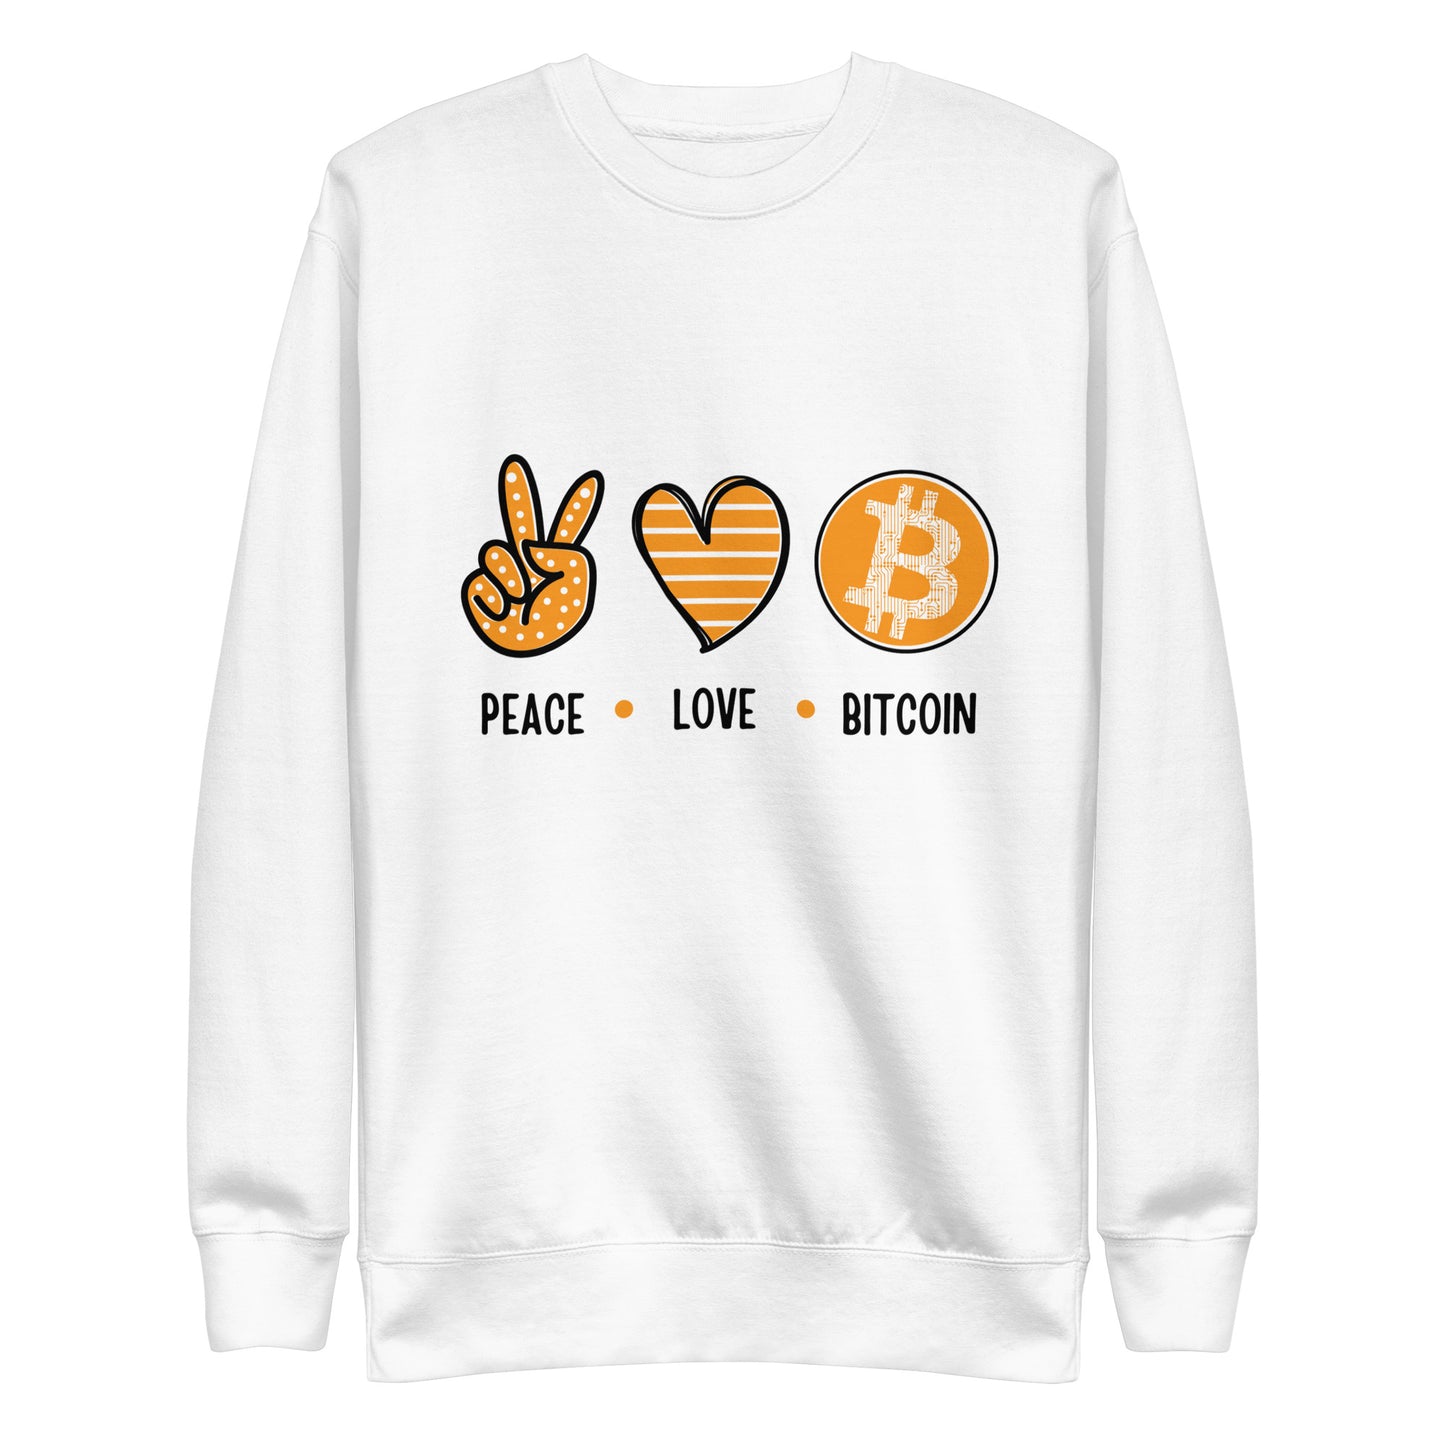 Peace, Love, Bitcoin Unisex Premium Sweatshirt